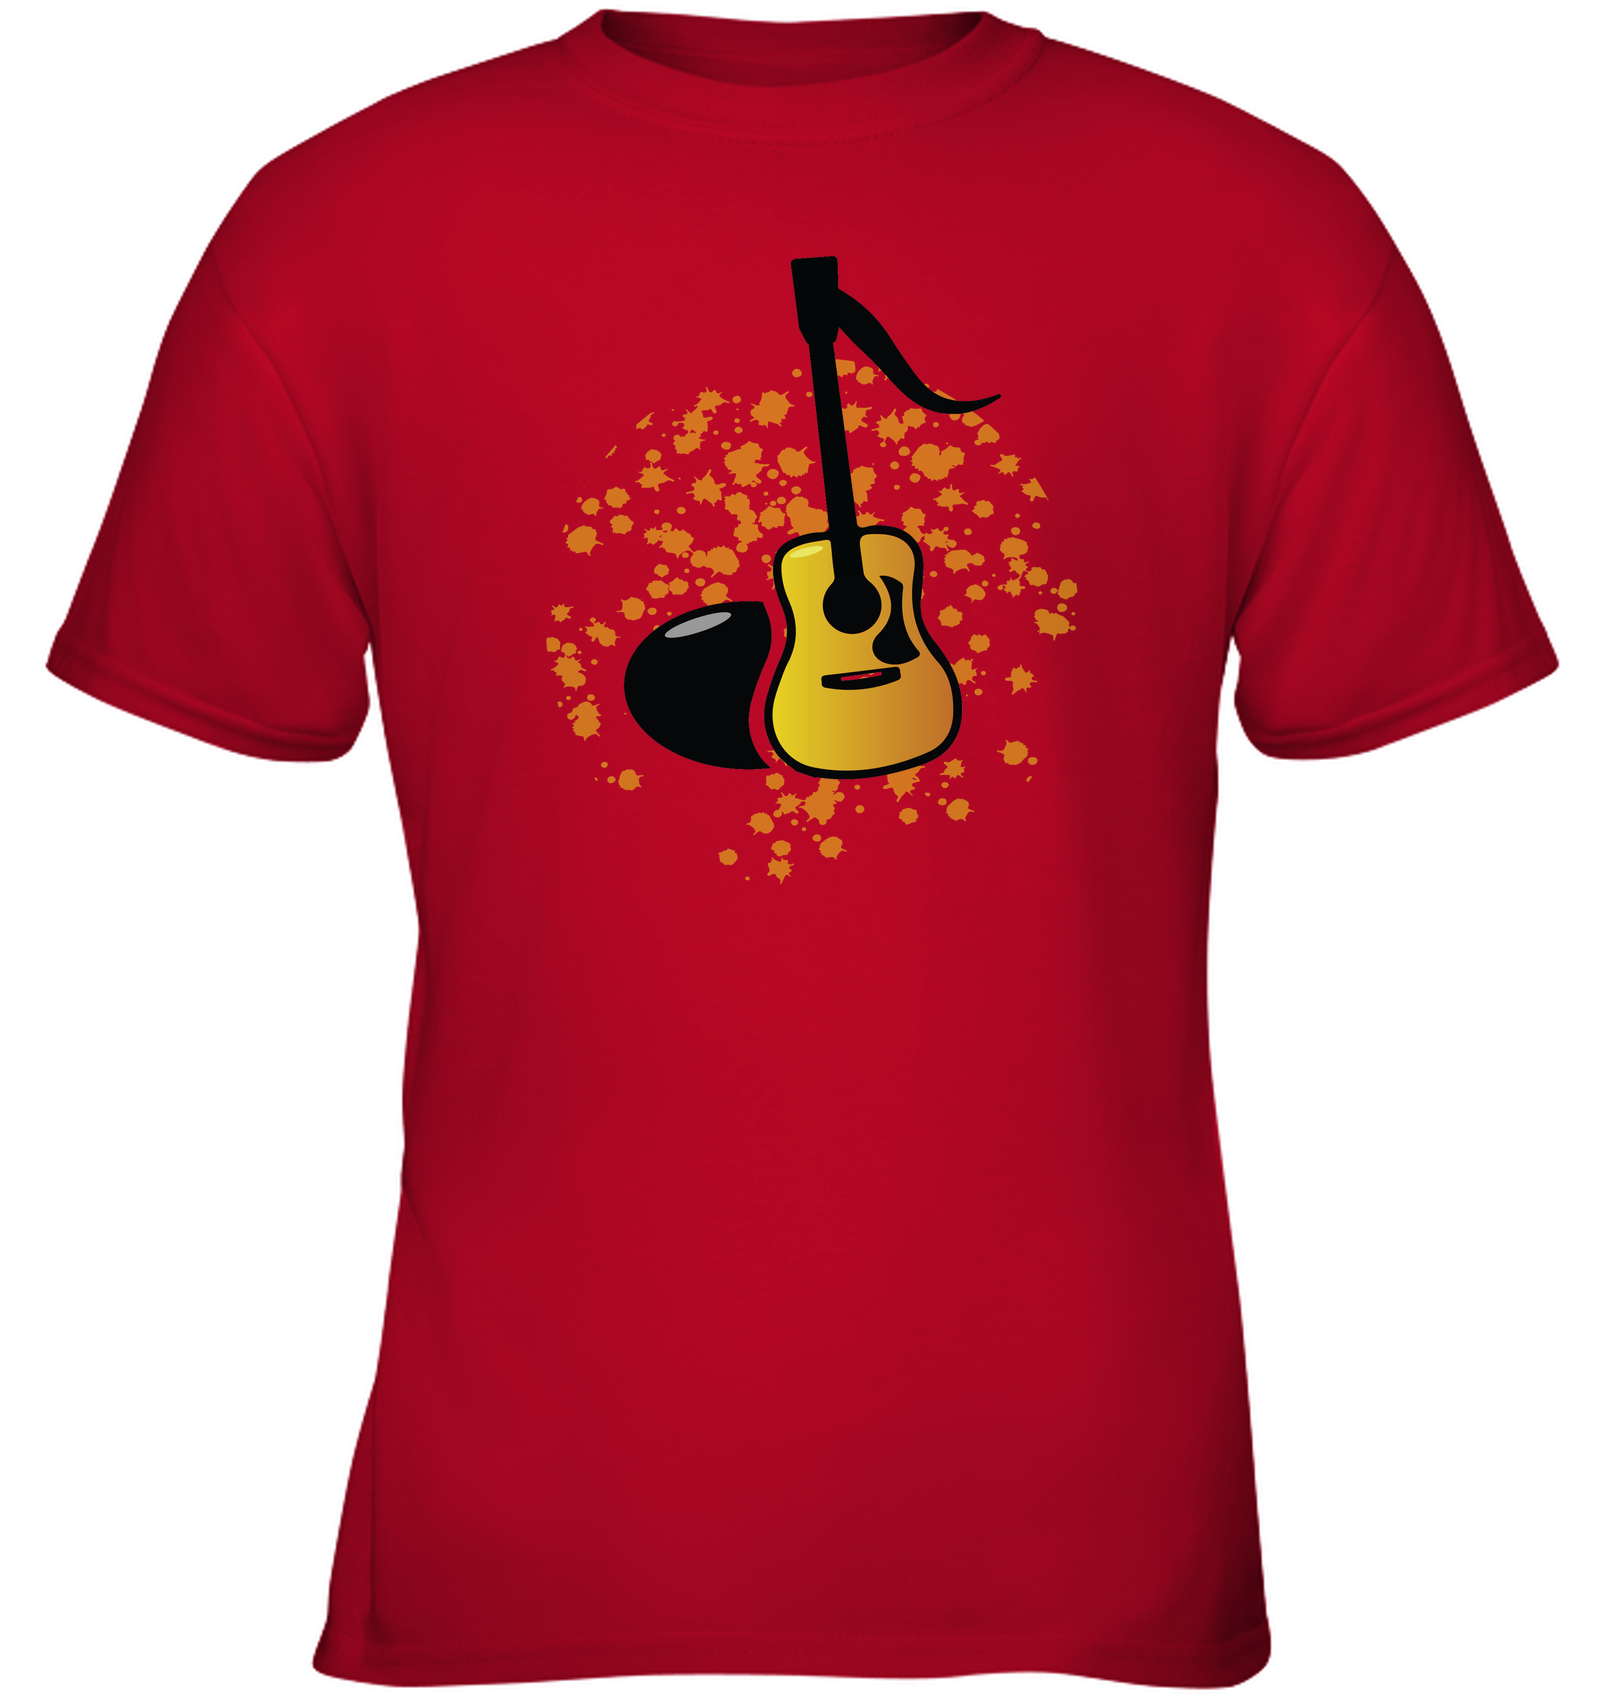 Acoustic Guitar Note - Gildan Youth Short Sleeve T-Shirt